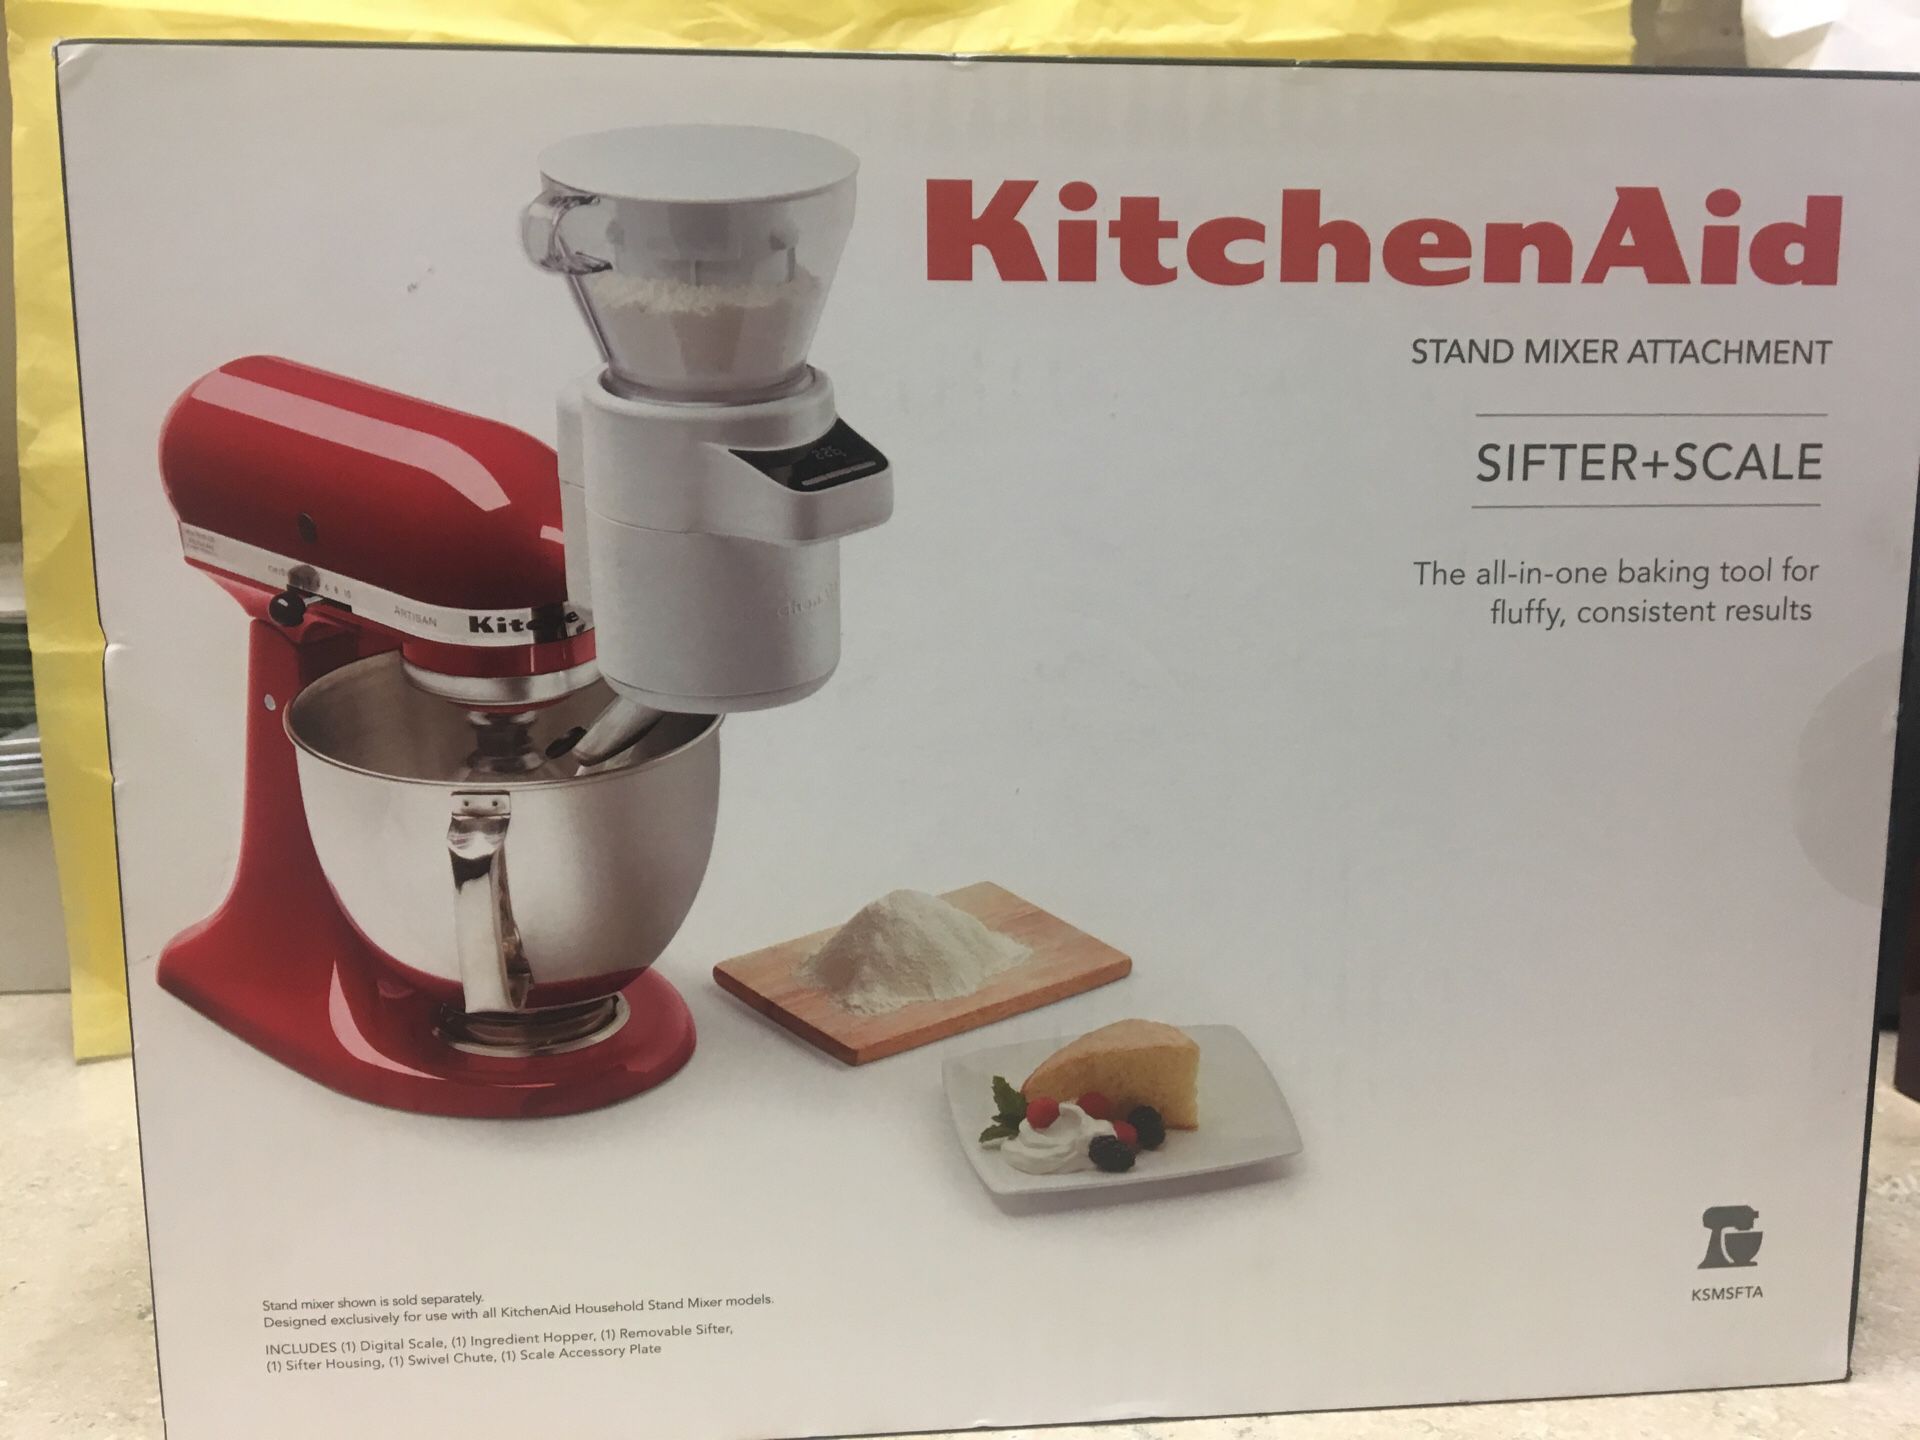 KitchenAid KSMSFTA Sifter + Scale Attachment